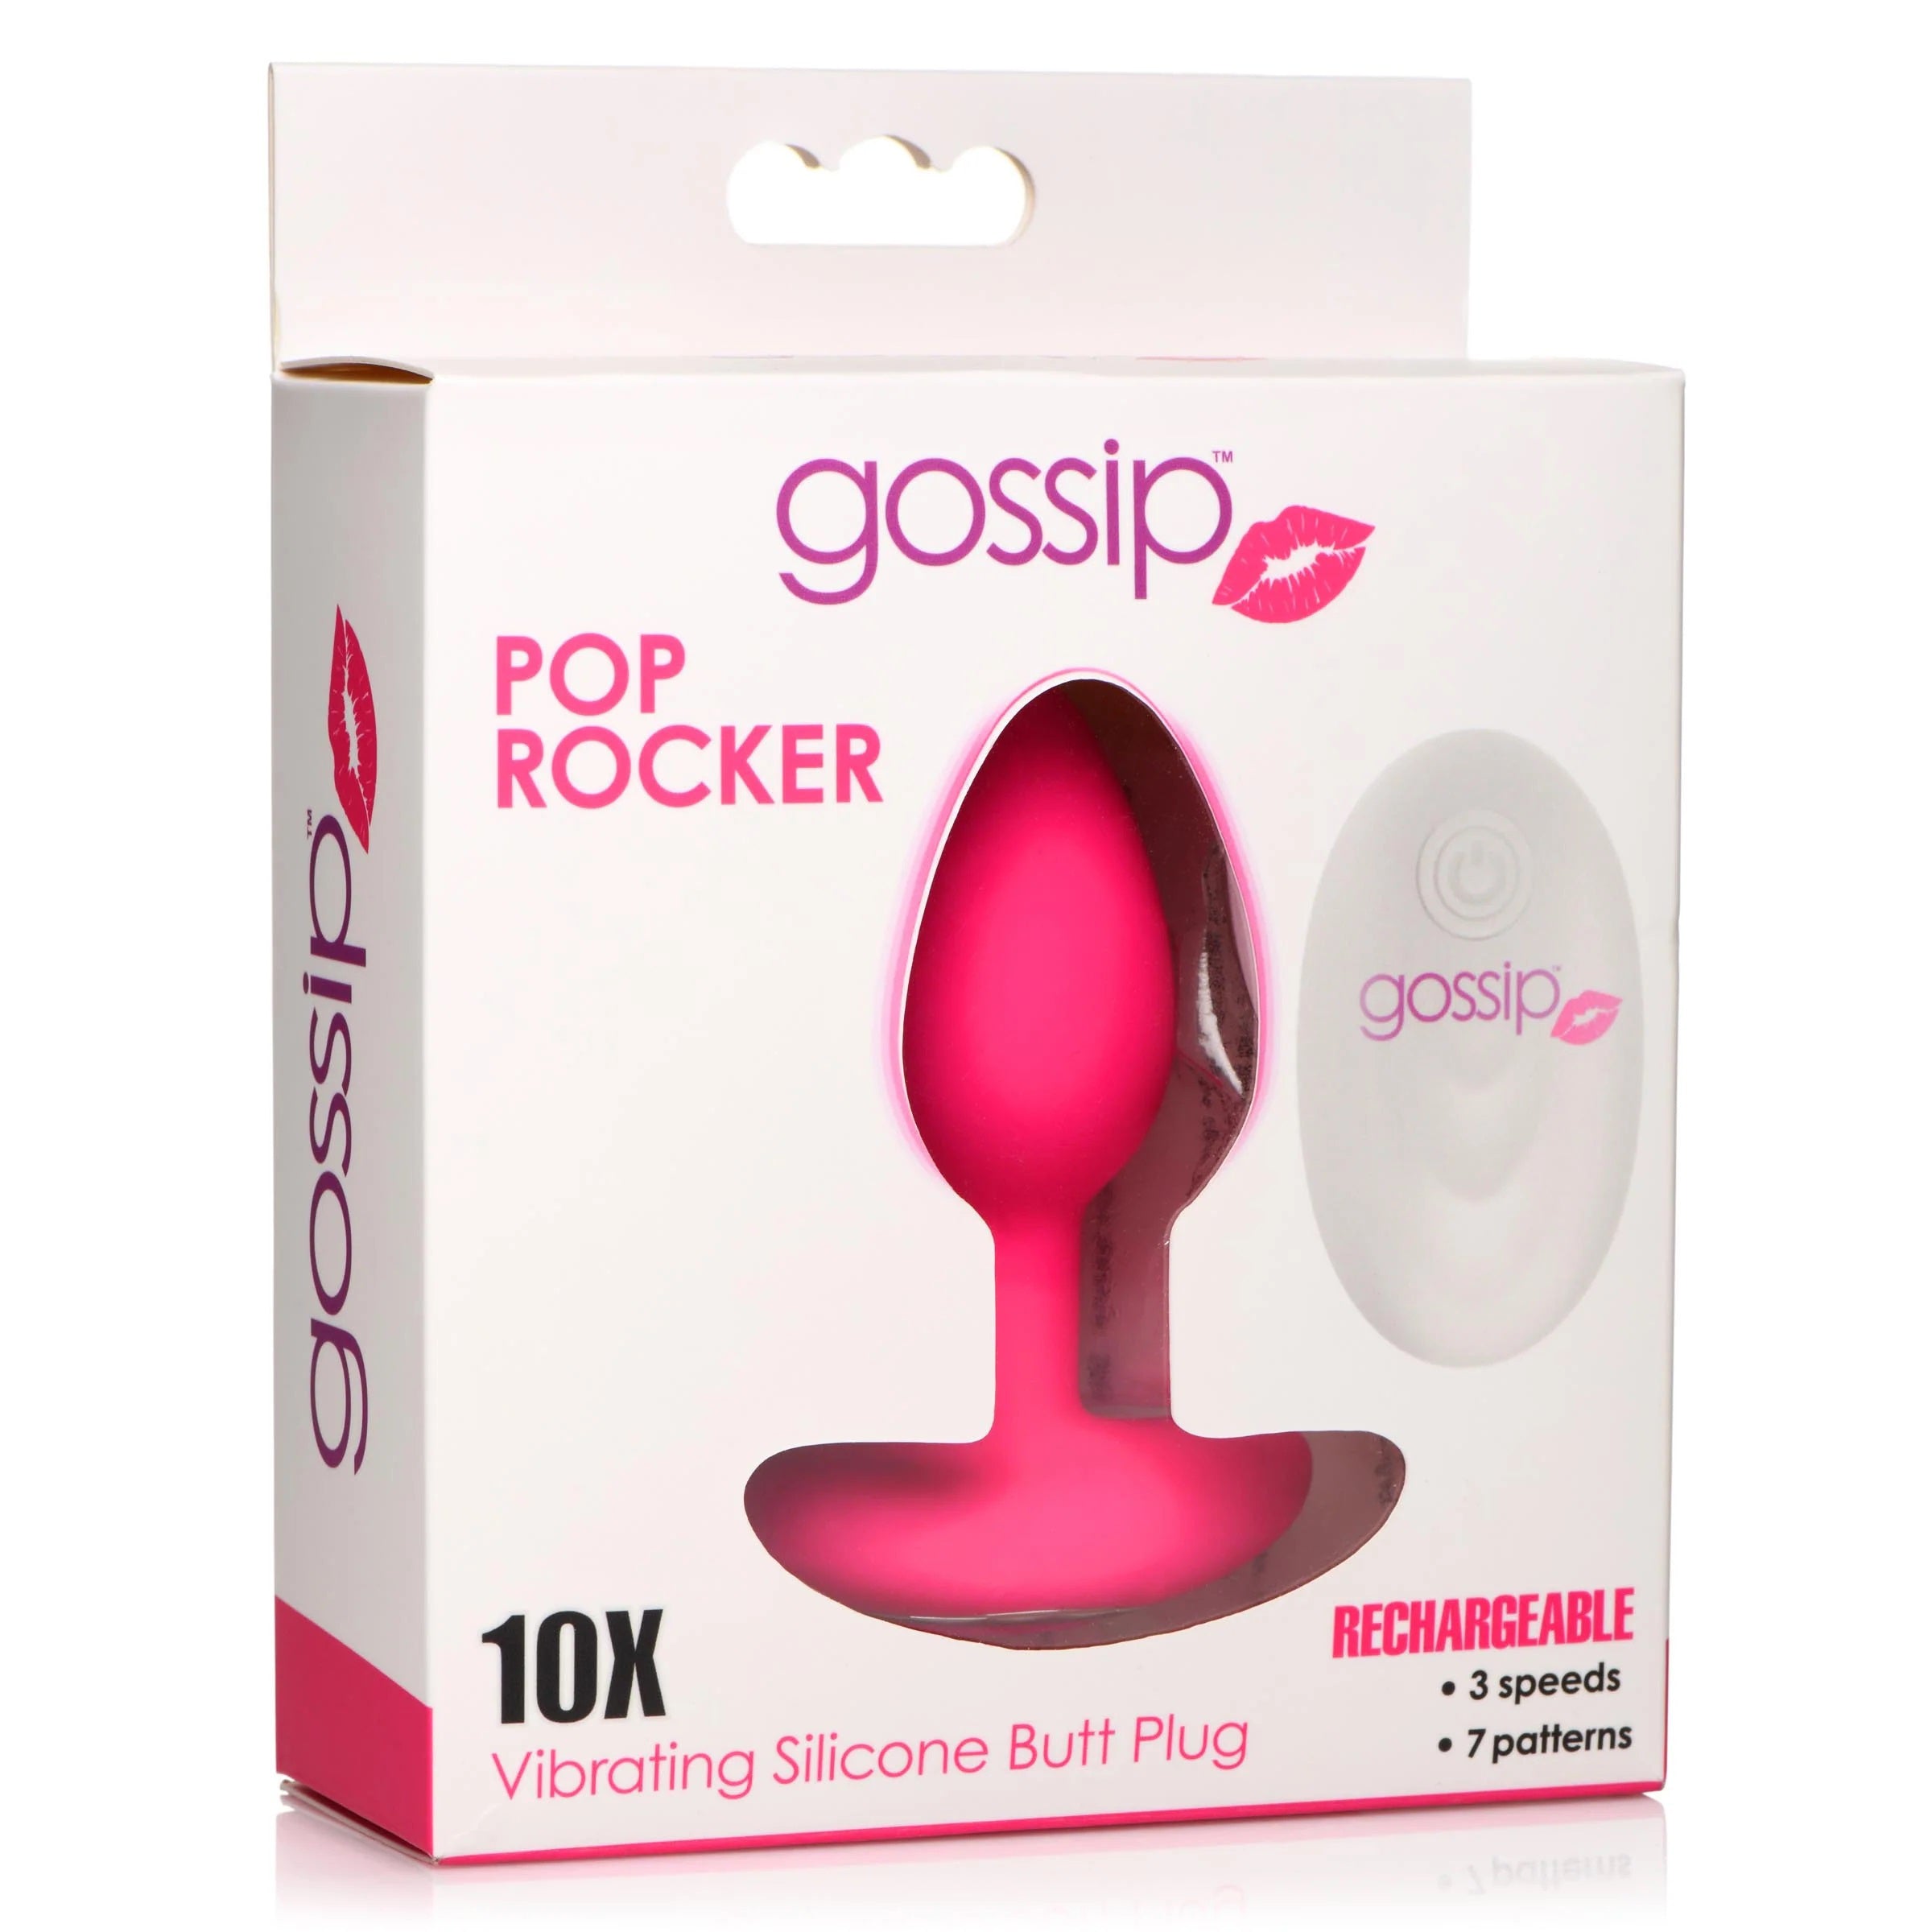 Gossip Pop Rocker 10x Vibrating Silicone Plug - Magenta-2